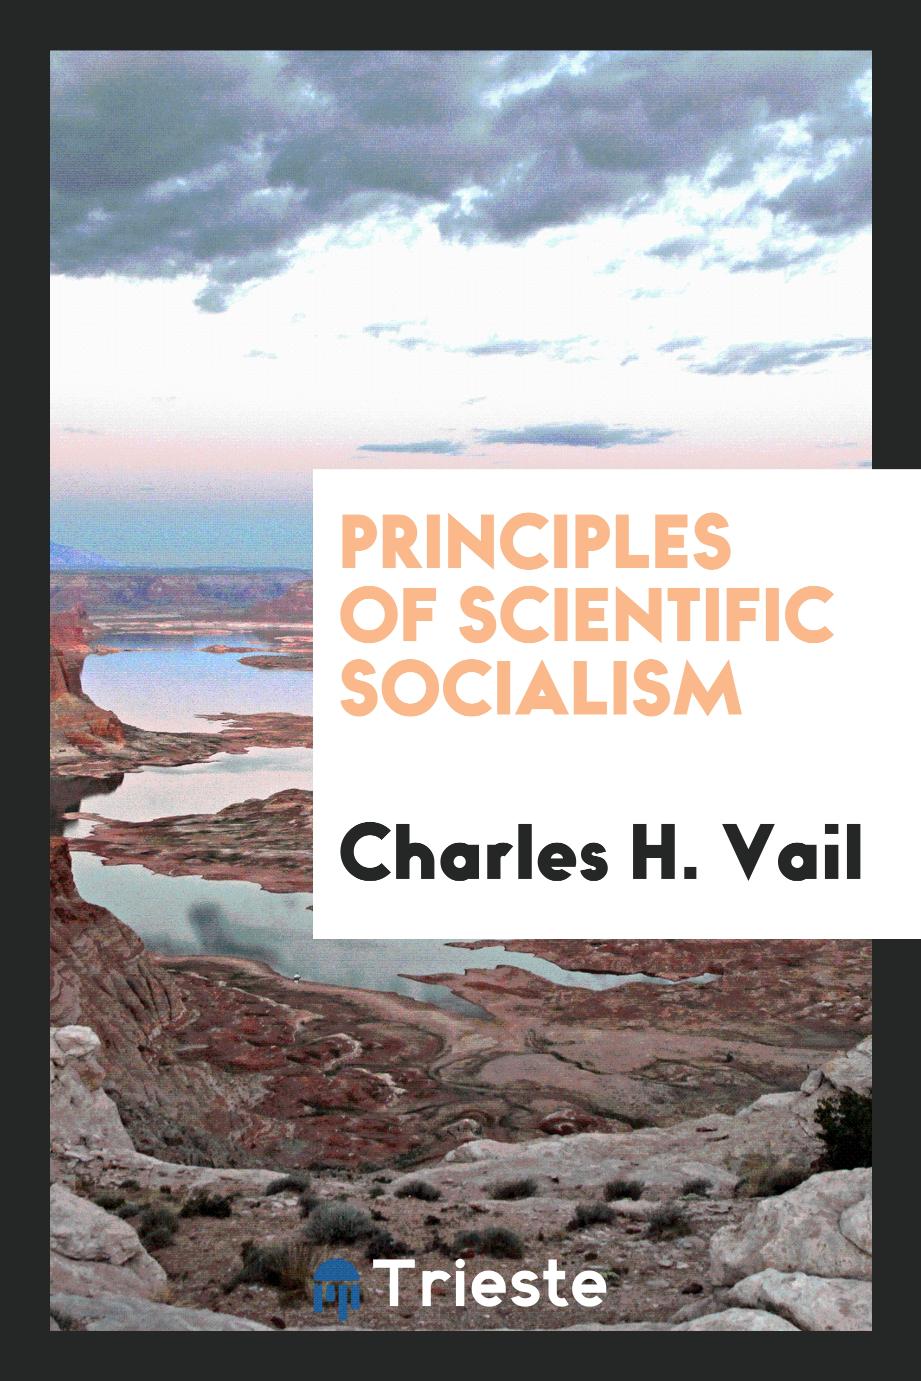 Principles of scientific socialism